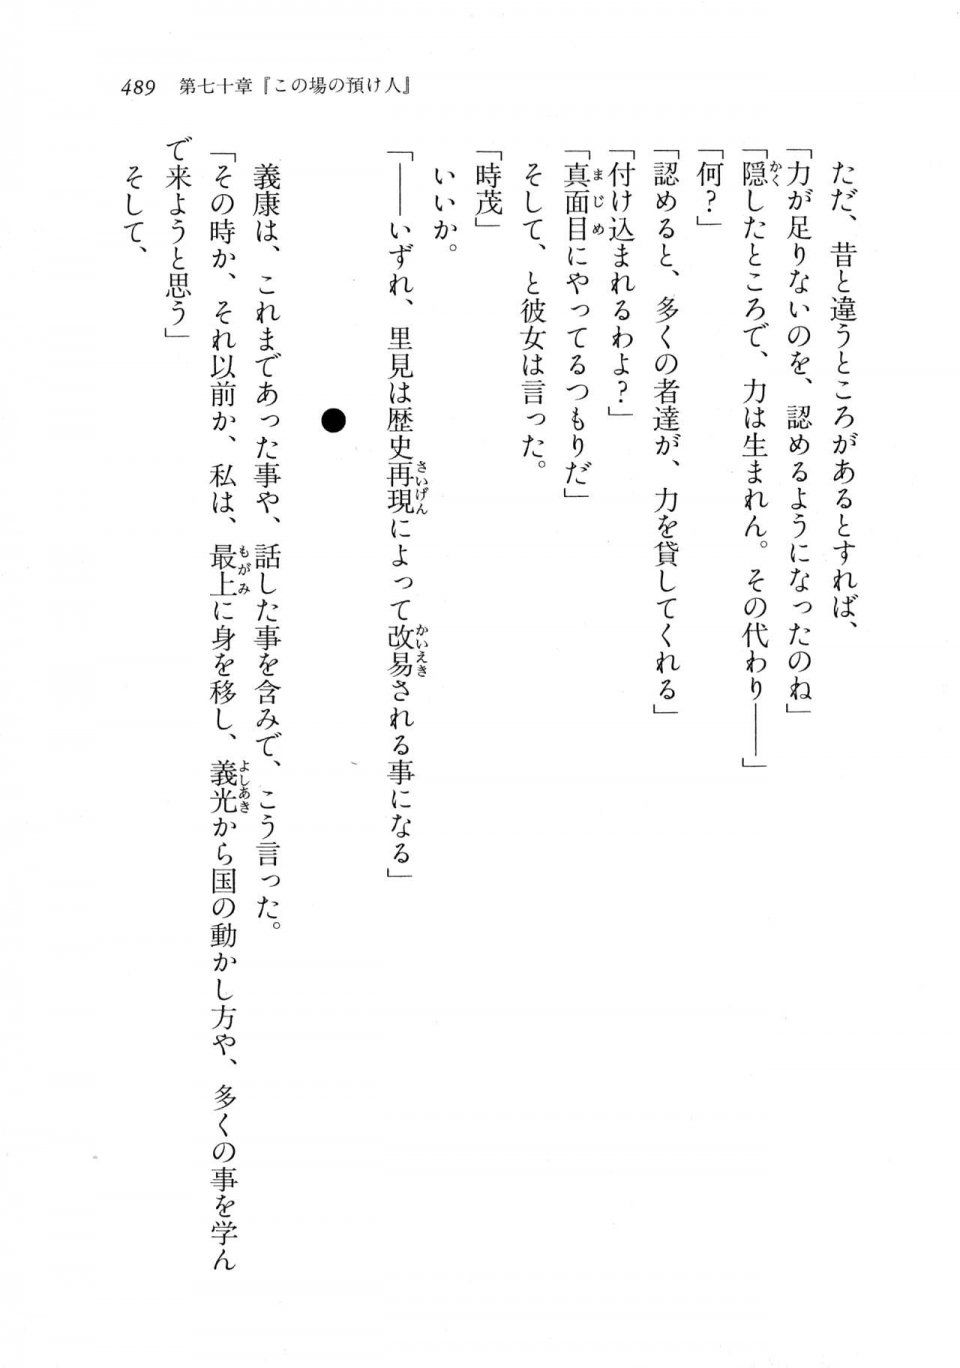 Kyoukai Senjou no Horizon LN Vol 18(7C) Part 1 - Photo #489